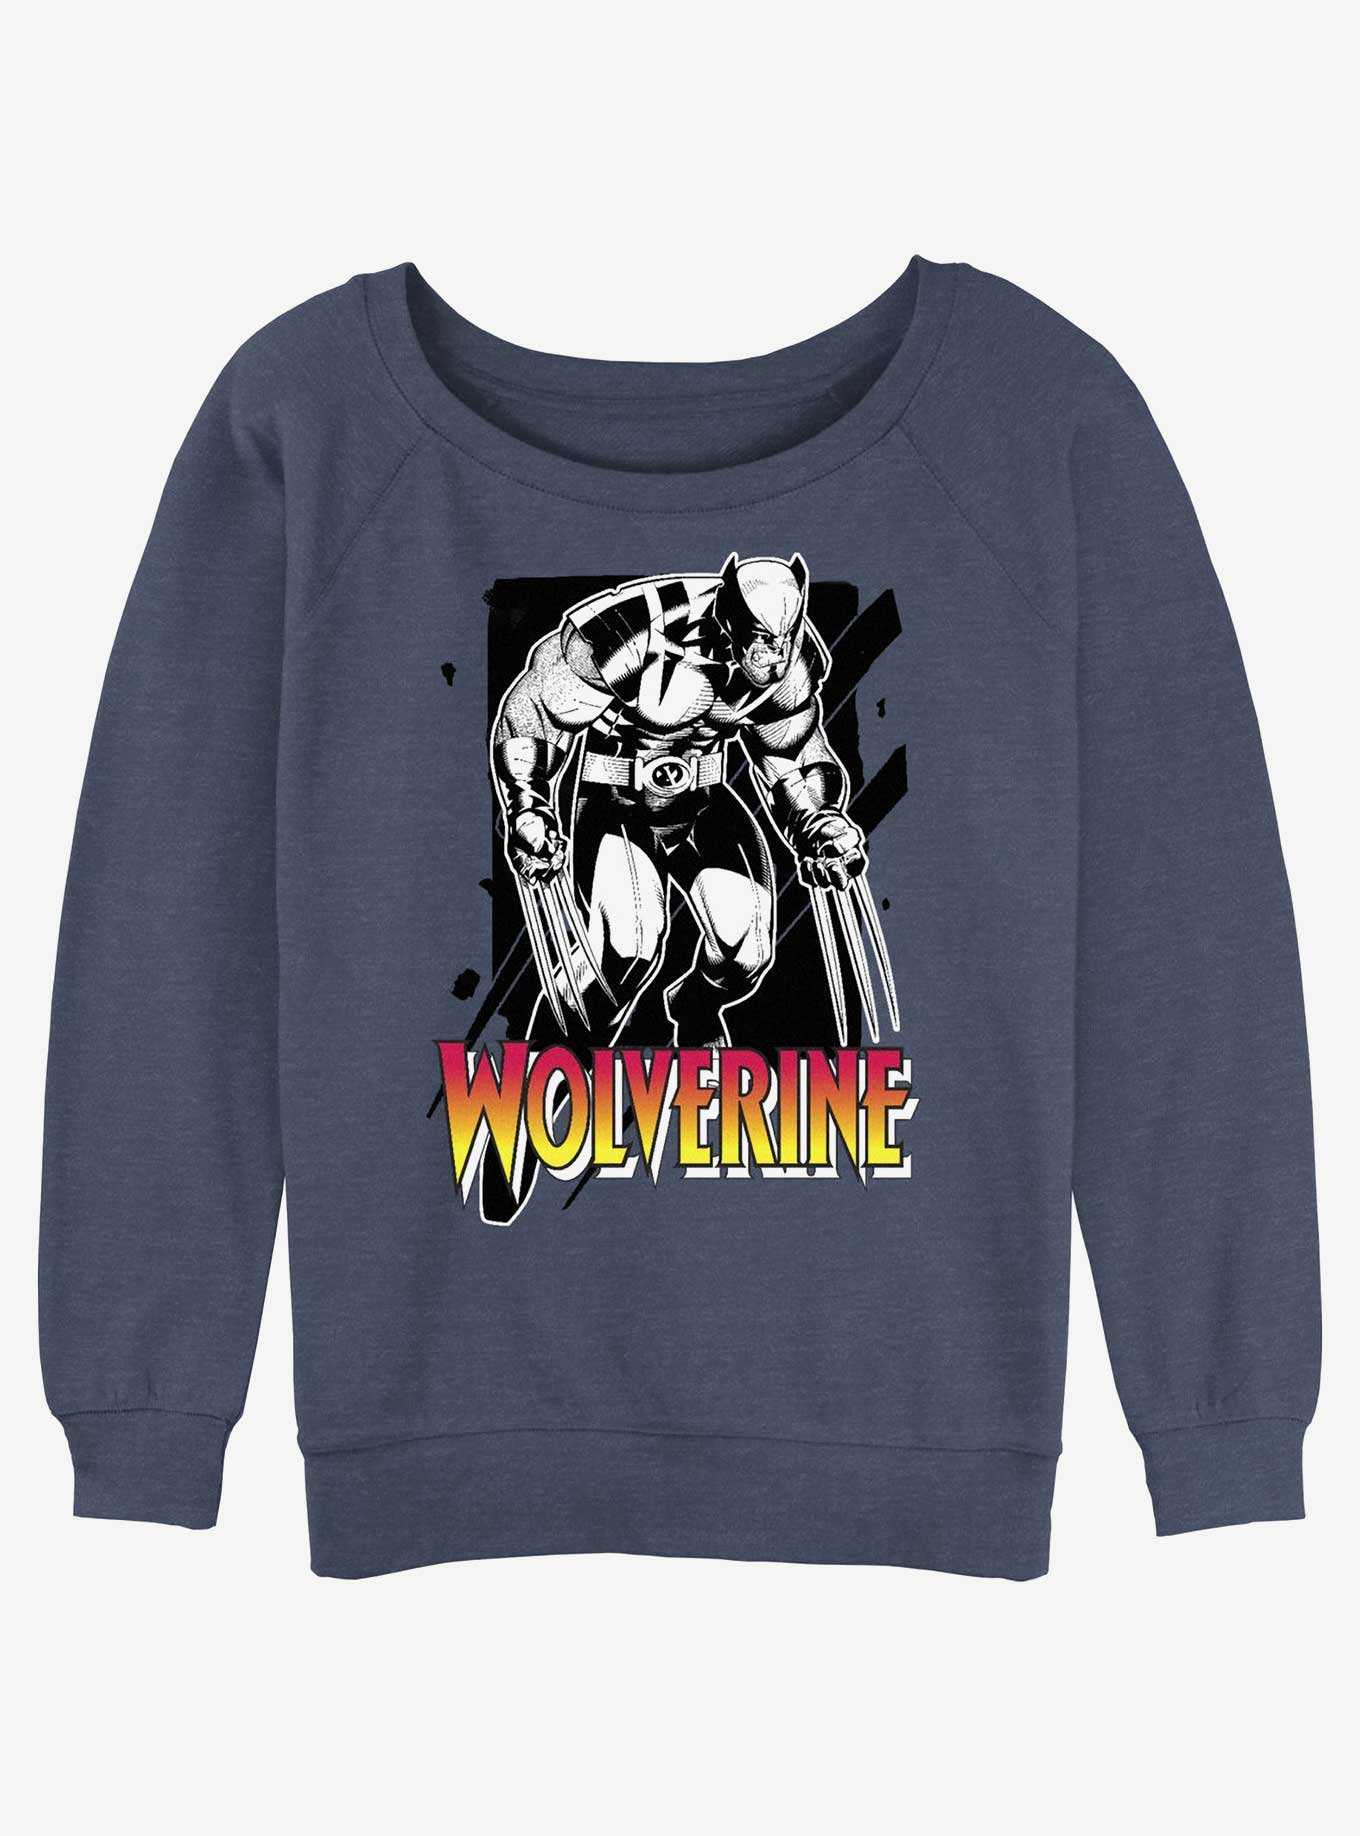 Wolverine Claw Marks Girls Slouchy Sweatshirt, , hi-res